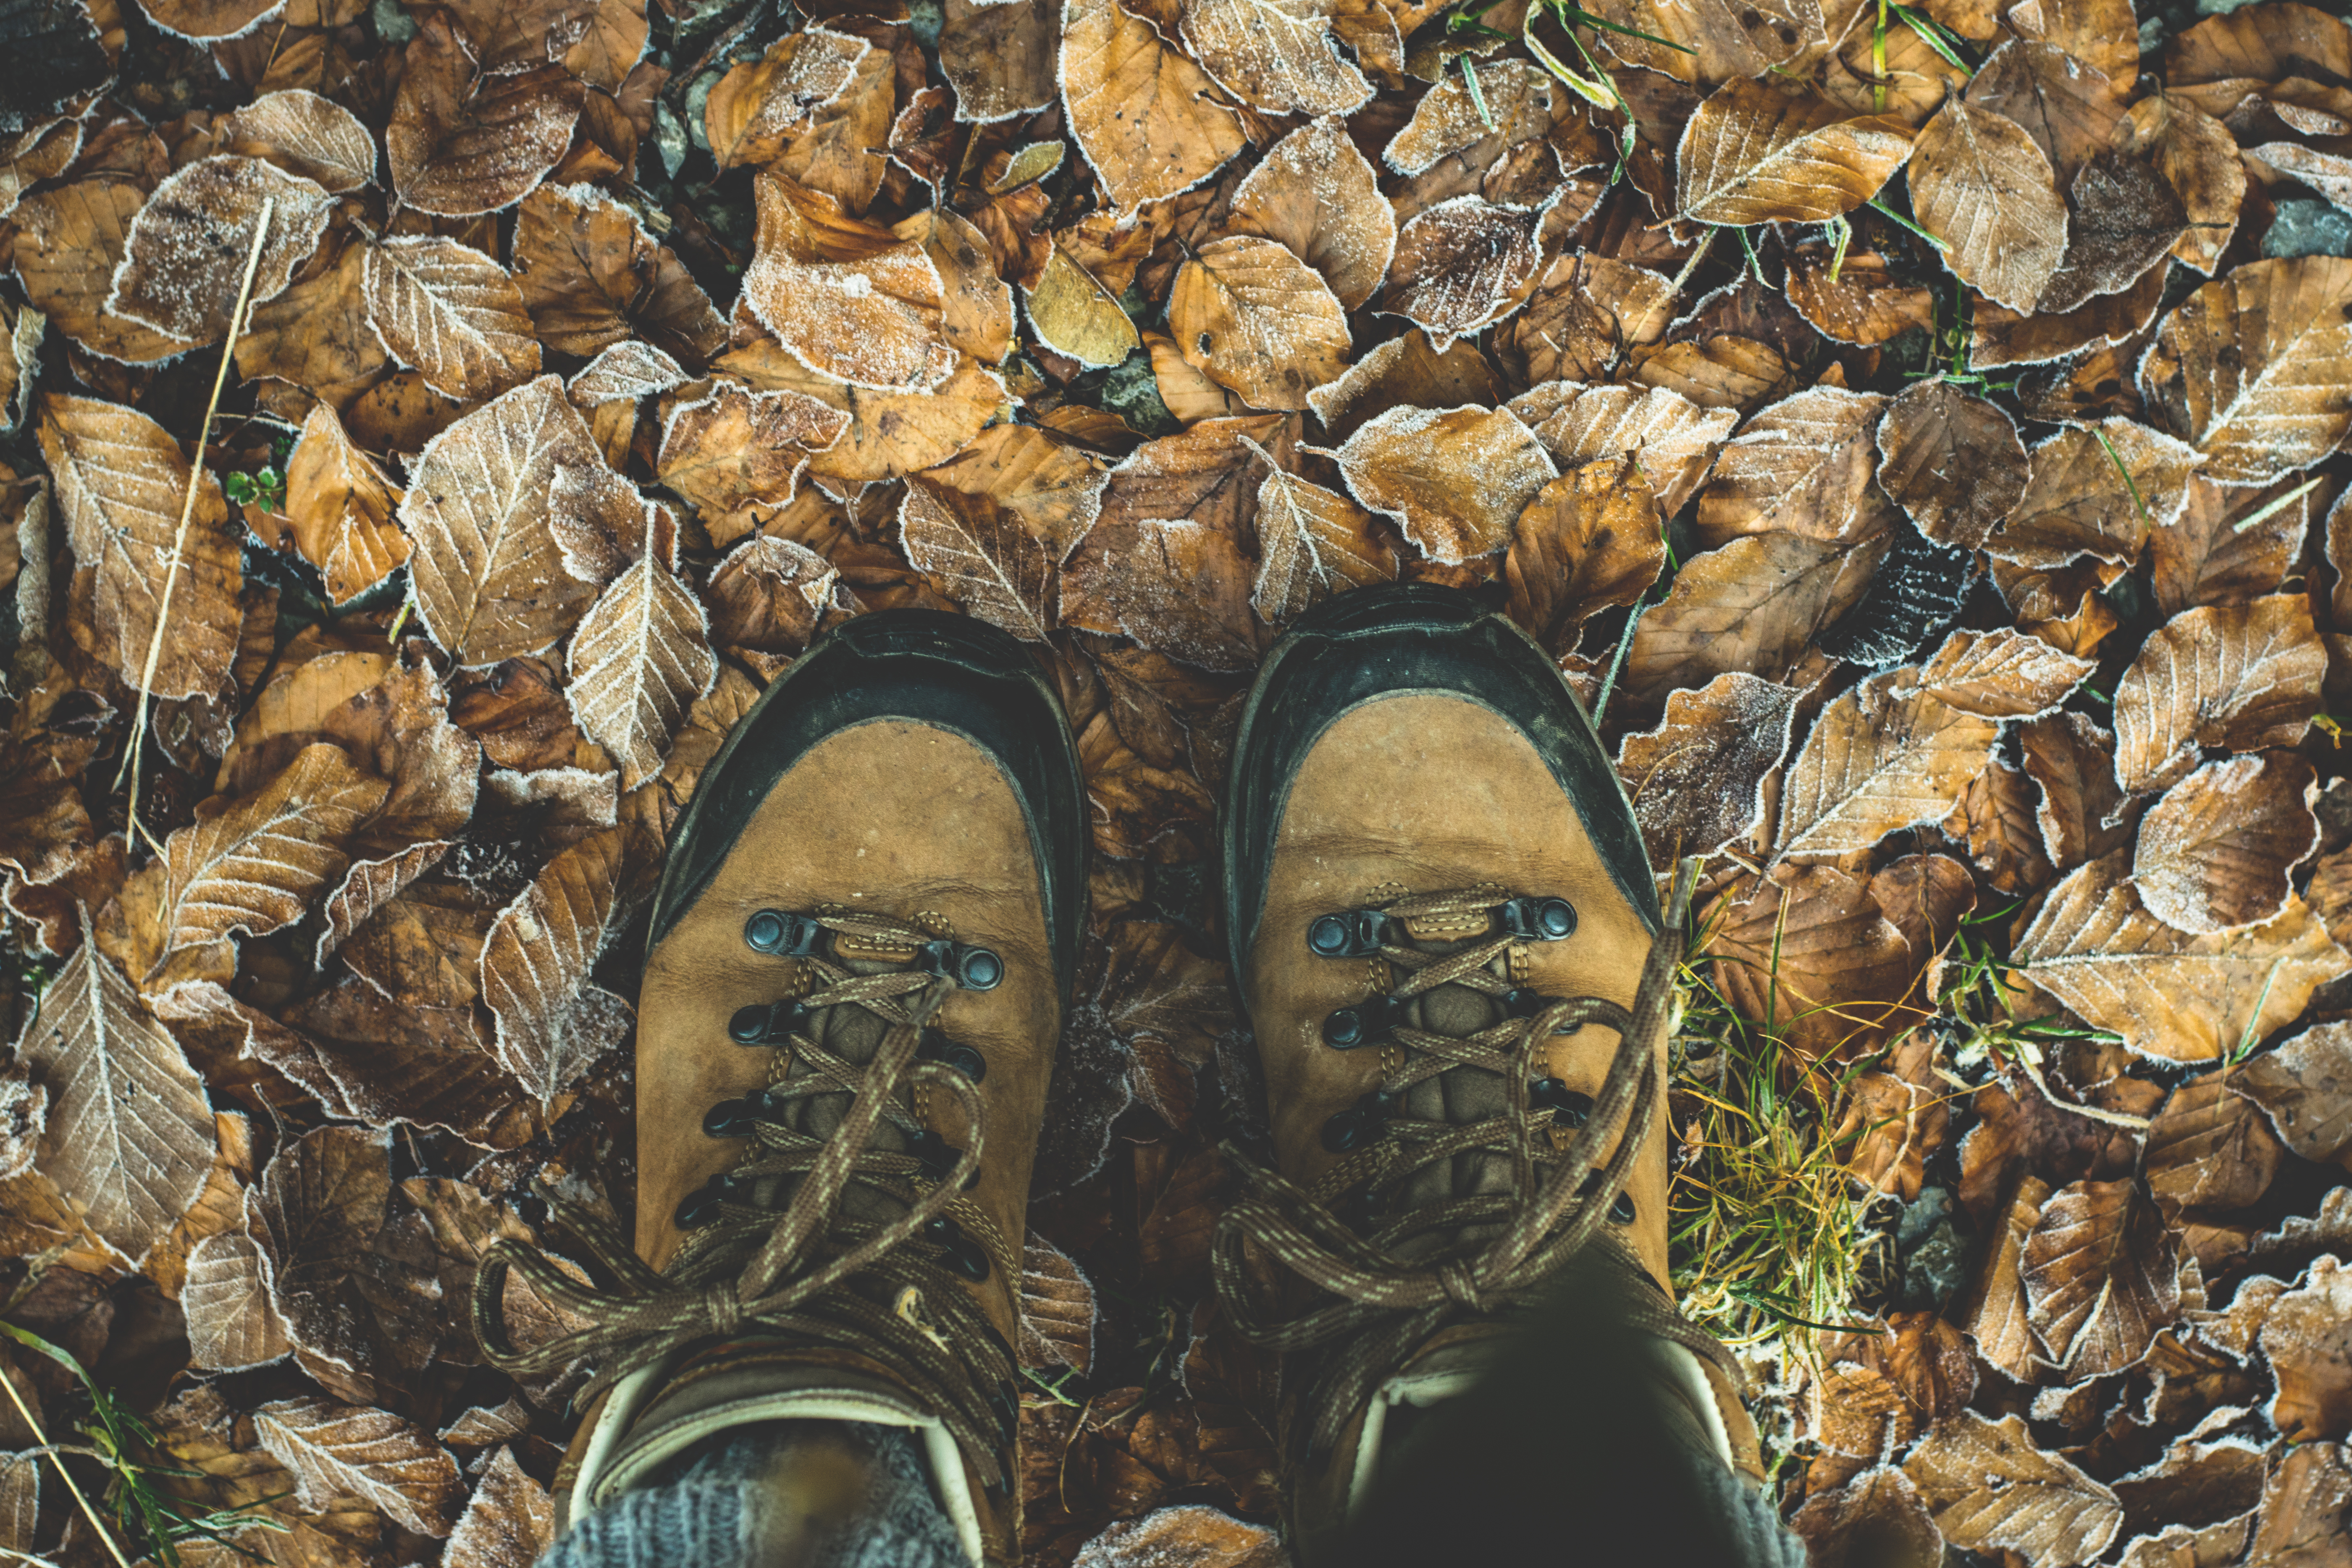 autumn, miscellanea, miscellaneous, legs, foliage, boots, shoes